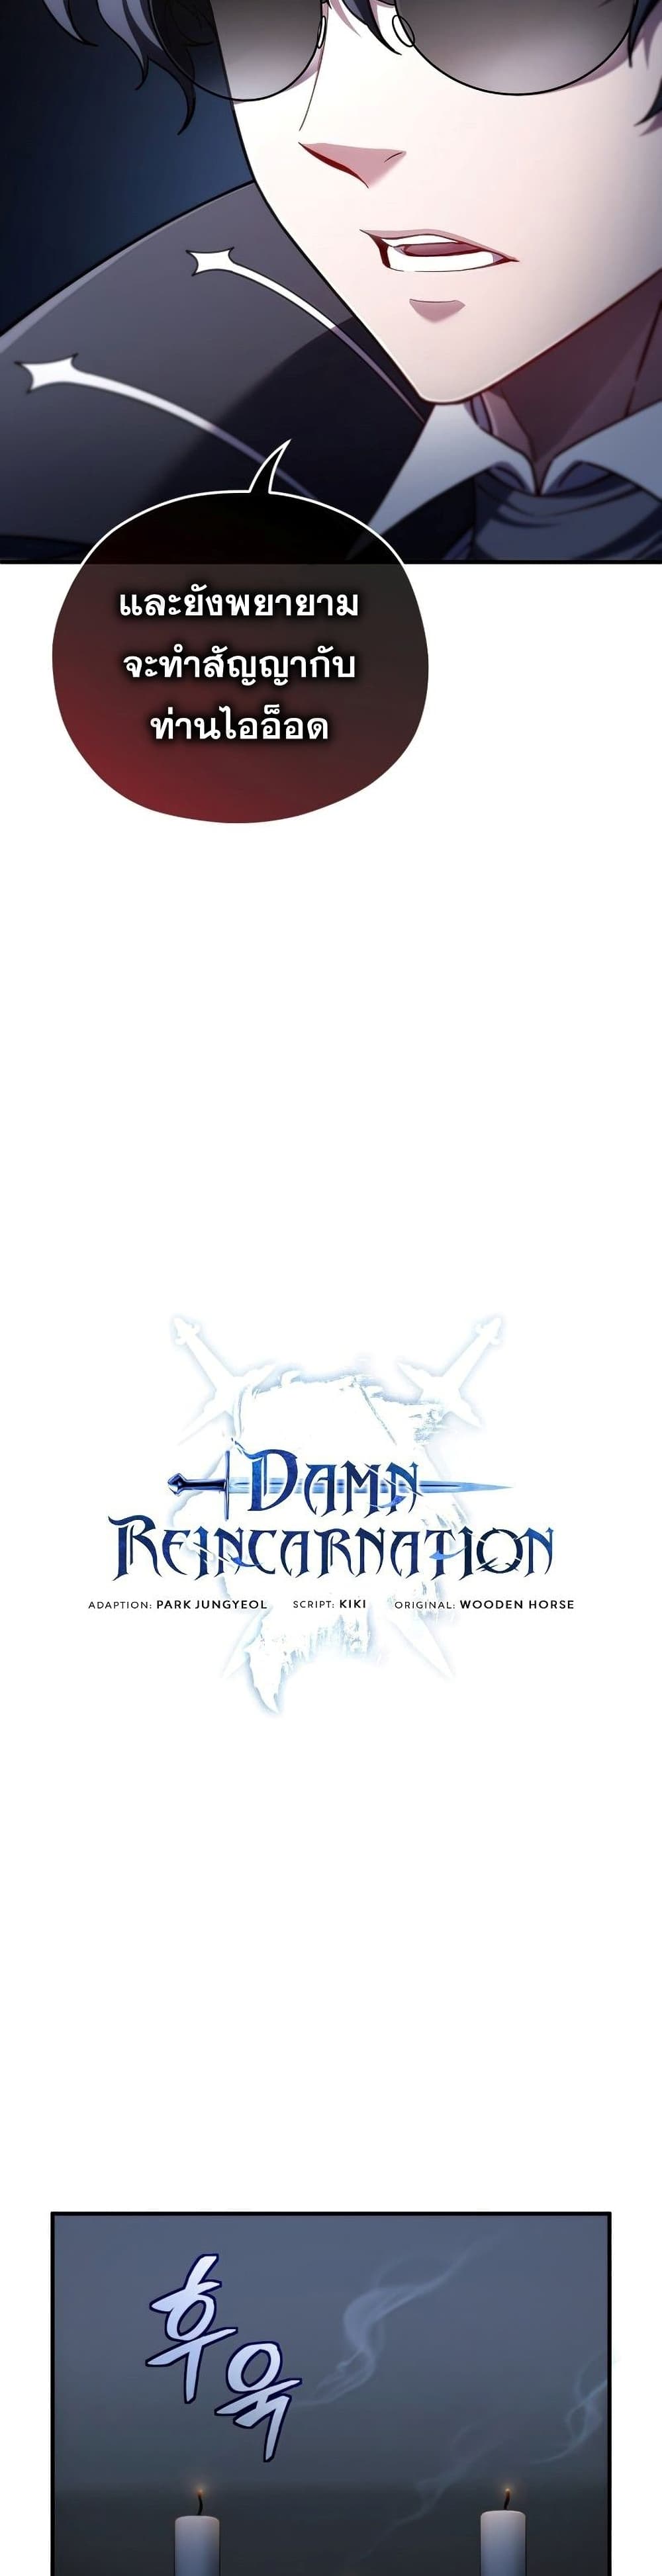 Damn Reincarnation 32-32